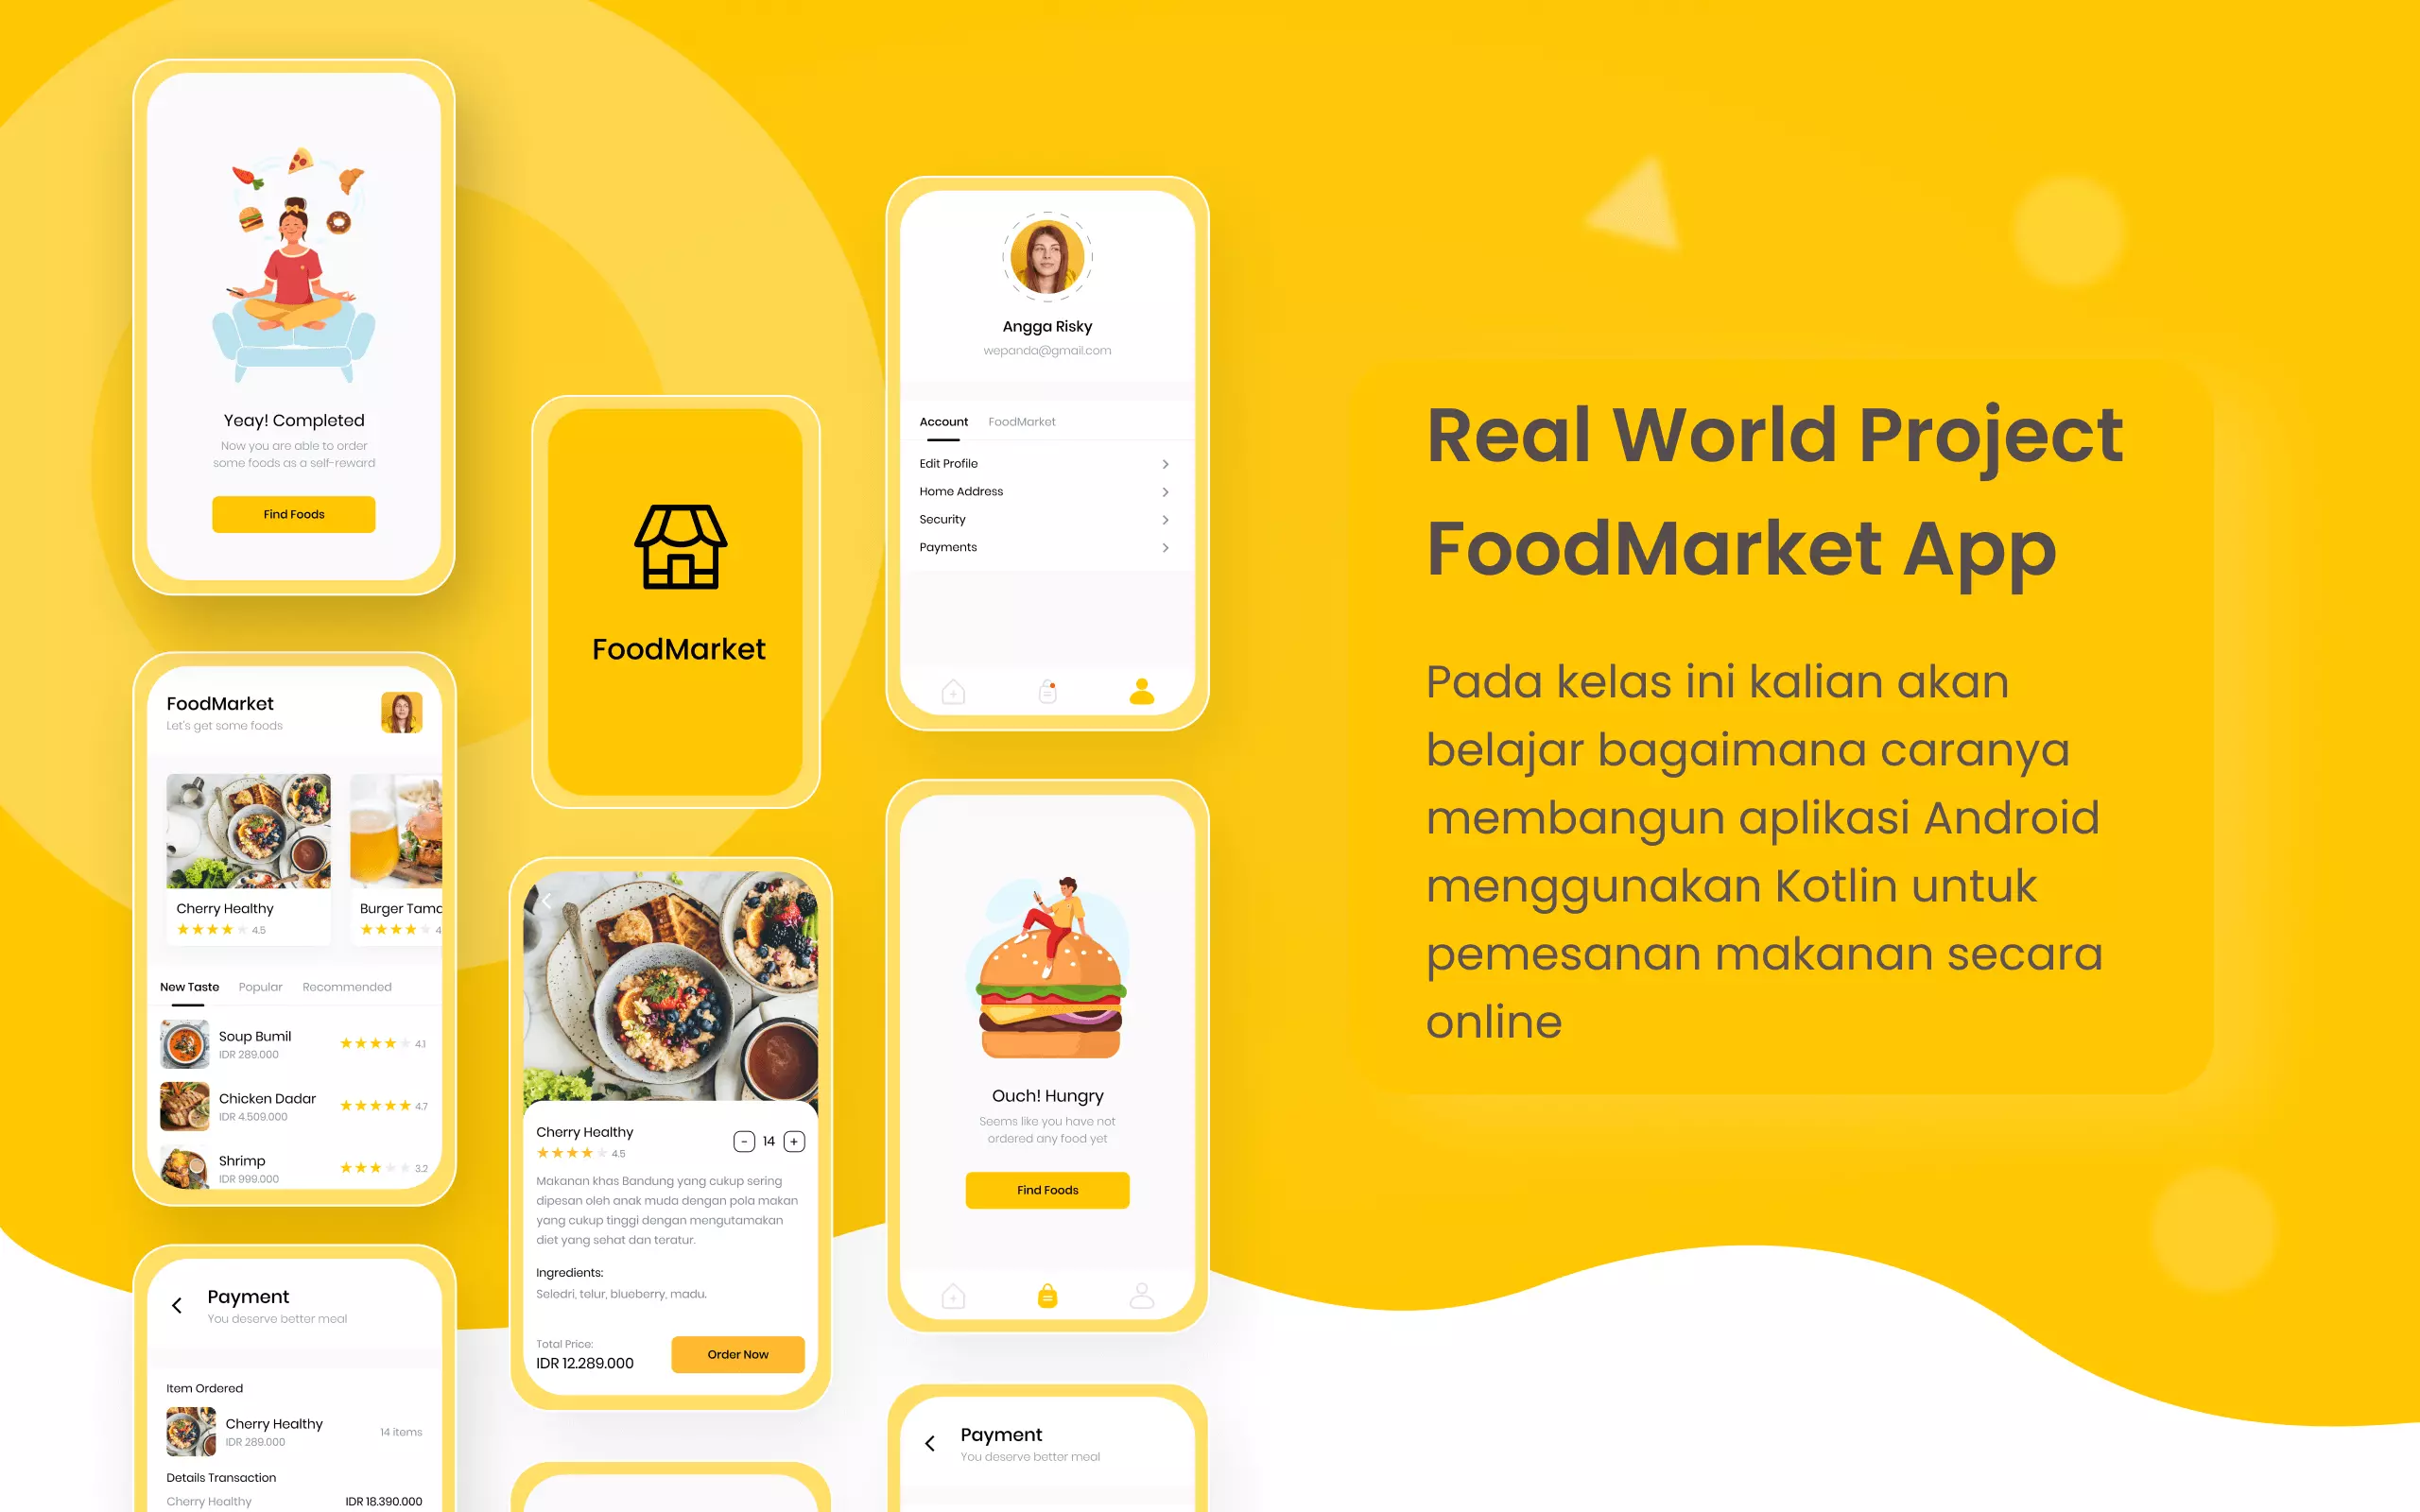 Foto kelas Full-Stack Laravel Kotlin: FoodMarket Apps